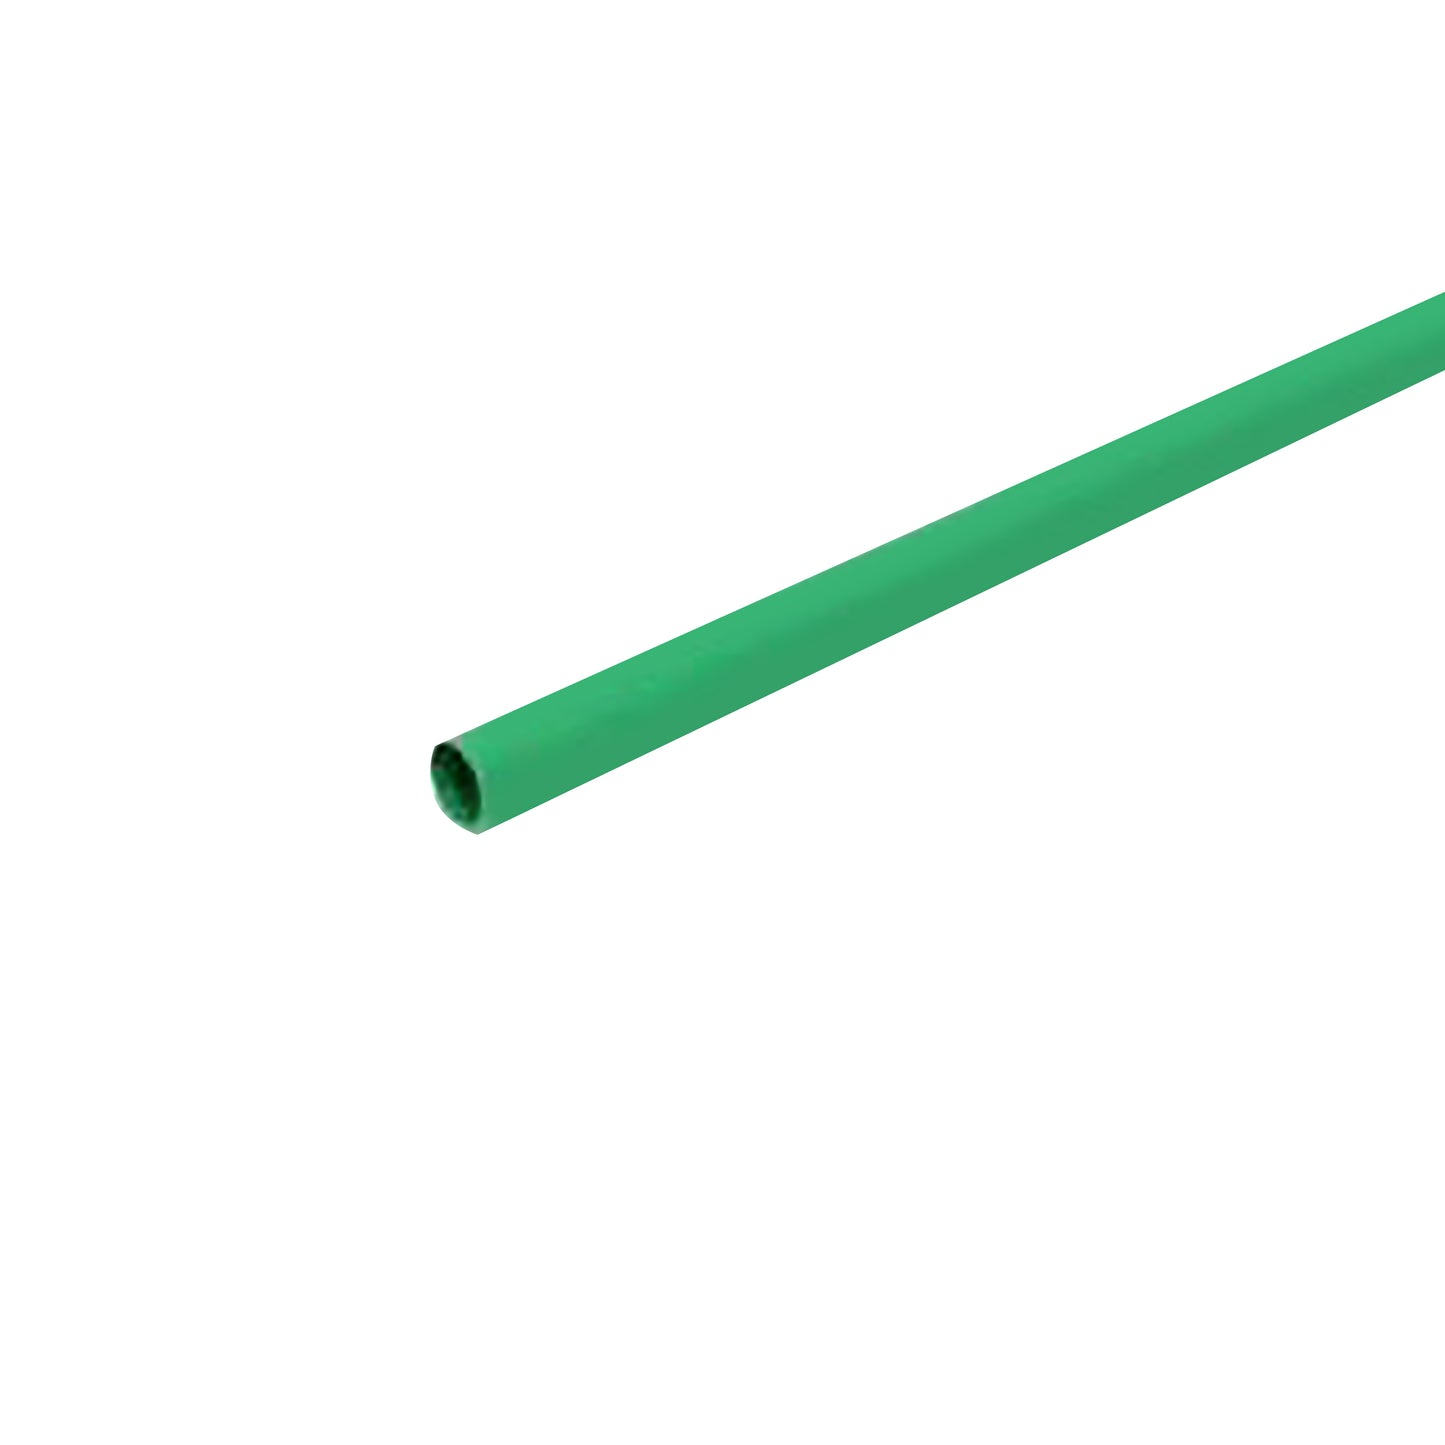 Flexible Thin Single Wall Non-Adhesive Heat Shrink Tubing 2:1 Green 1/2" ID - 48" Inch 4 Pack